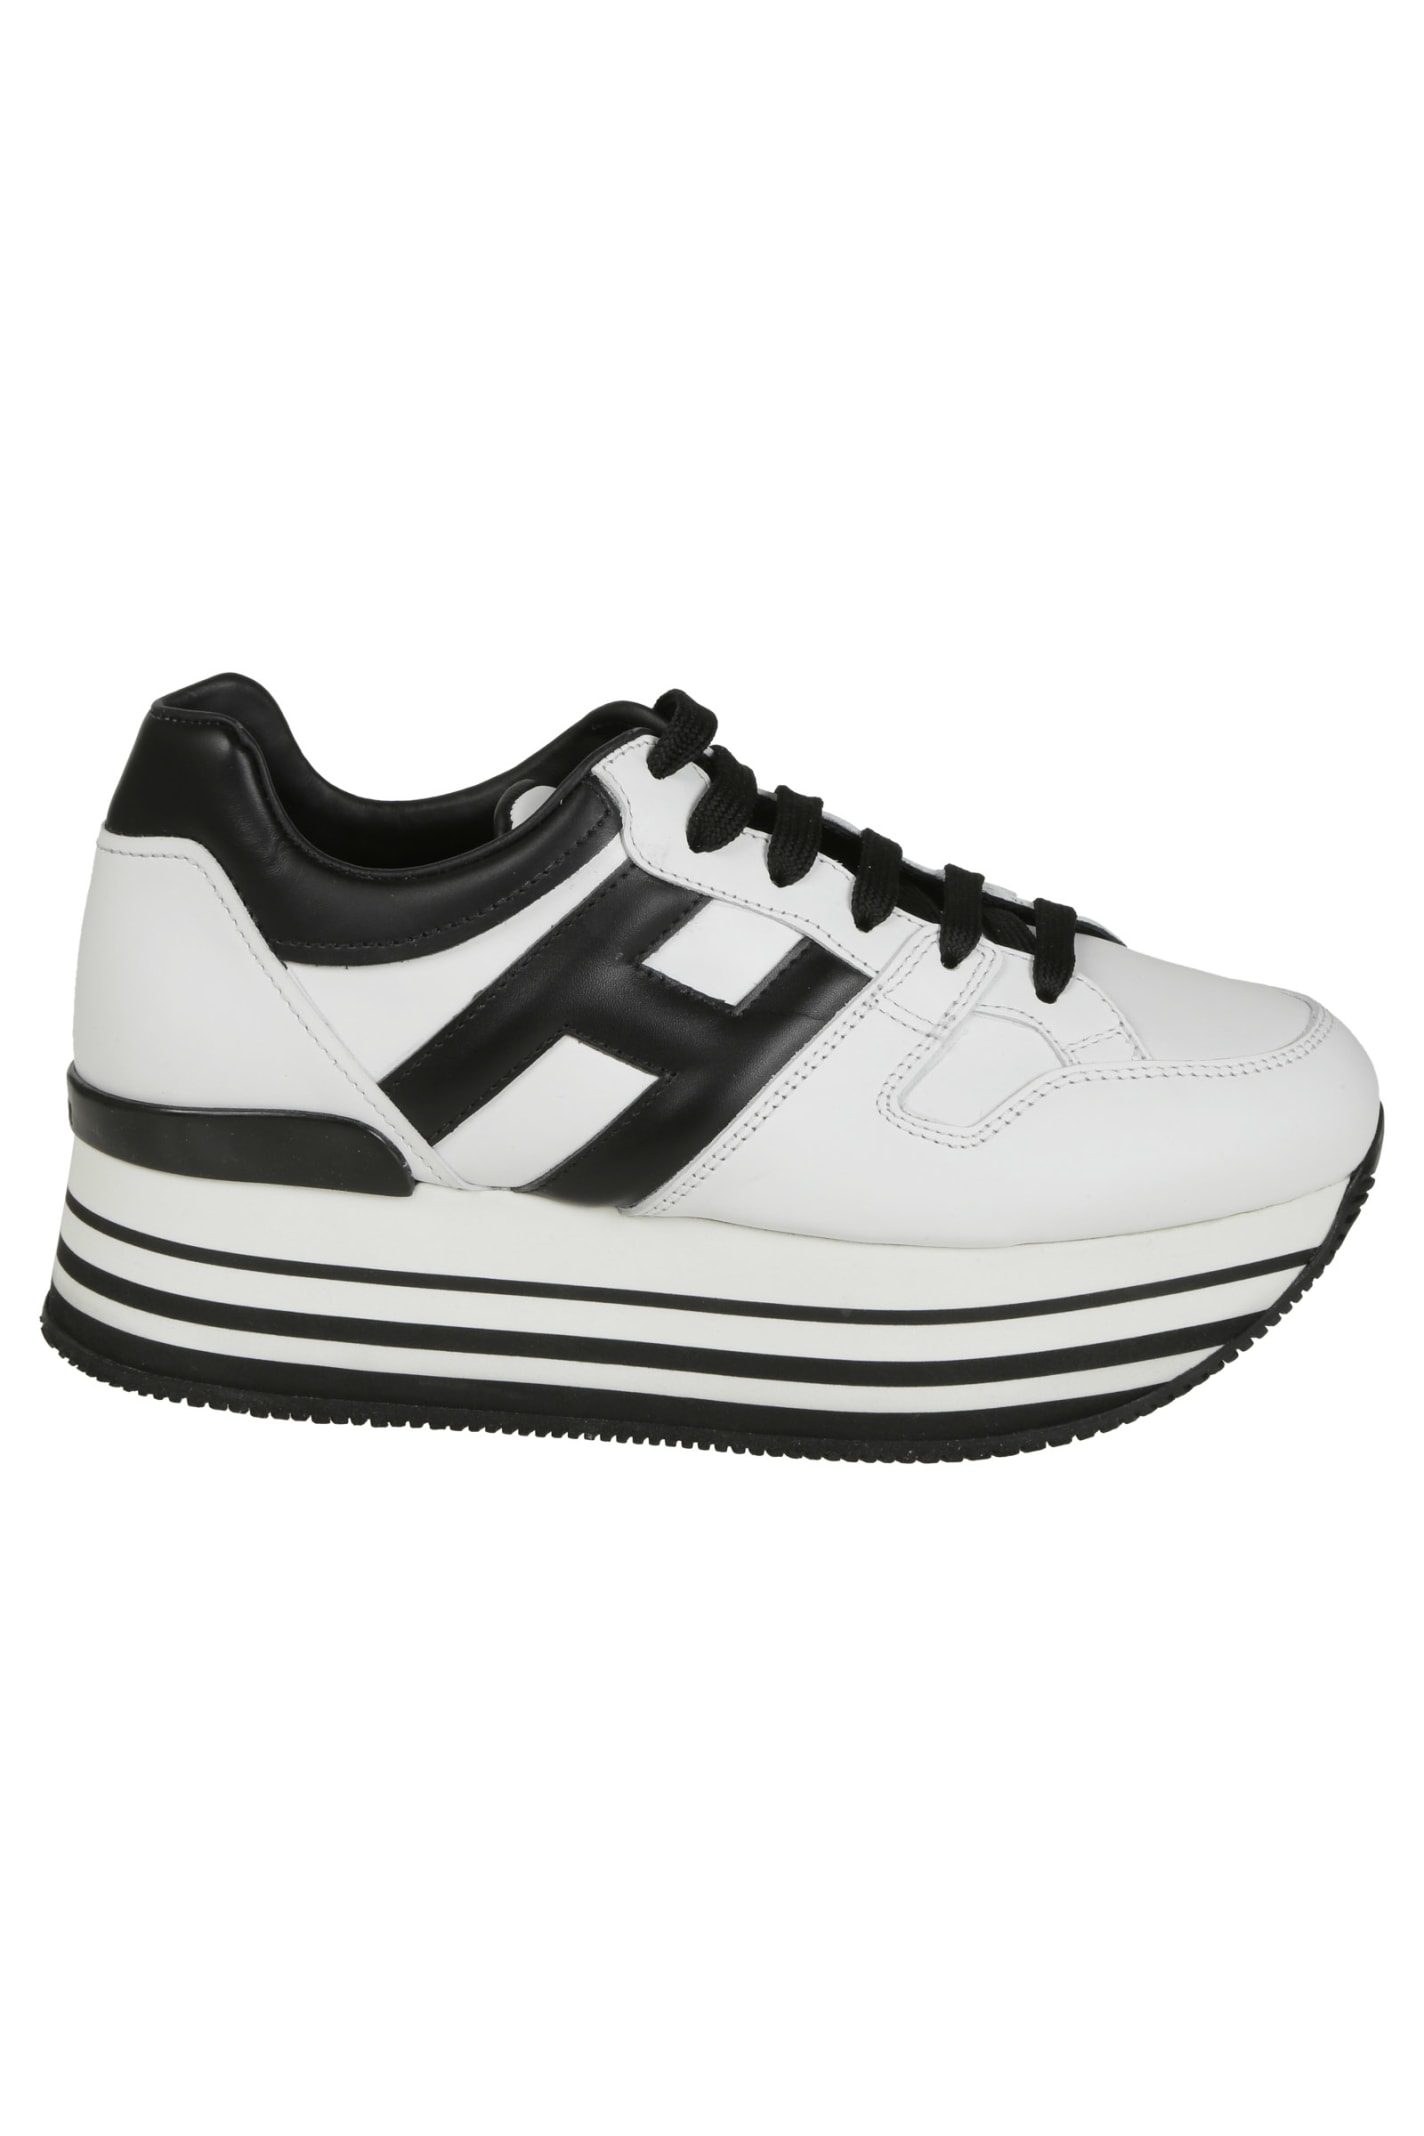 Hogan Hogan Platform Sneakers - 10834713 | italist